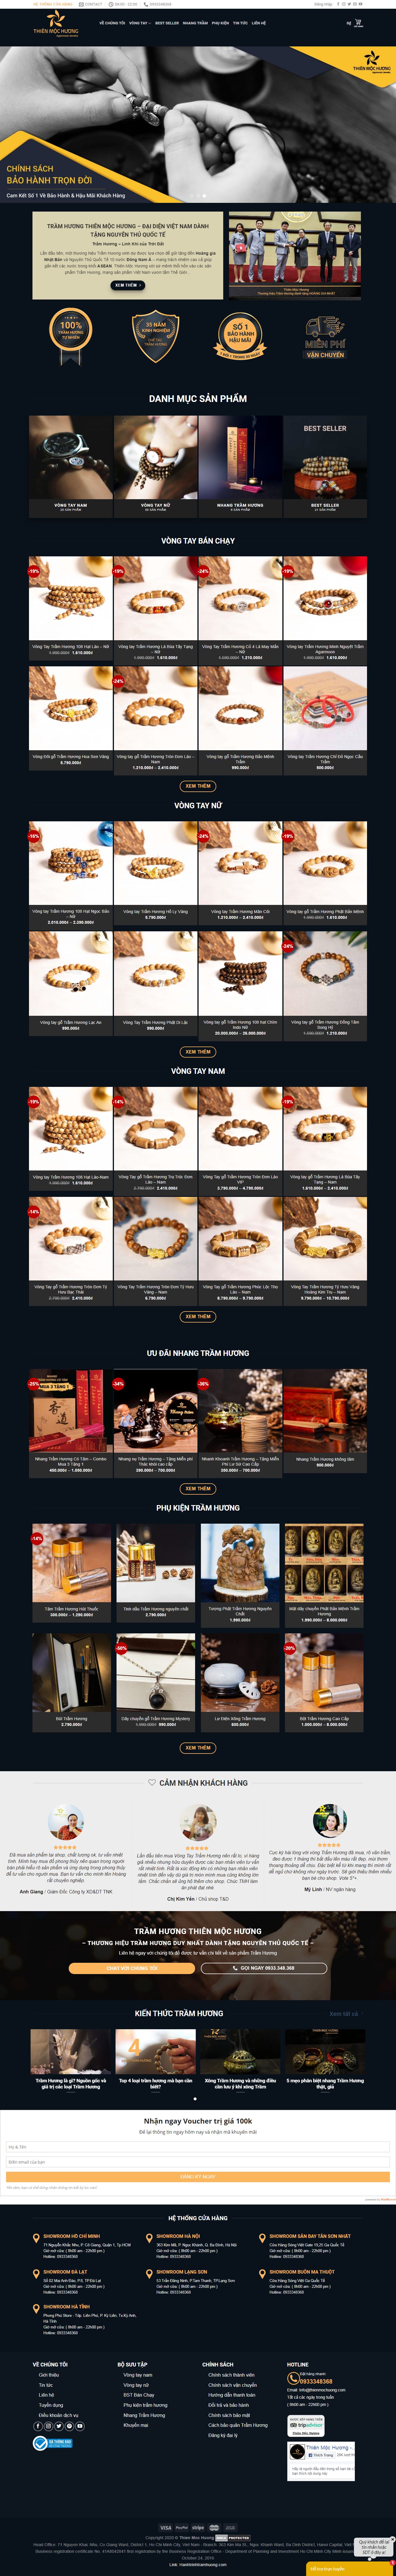 Thiết kế Website bán trầm hương - thienmochuong.com